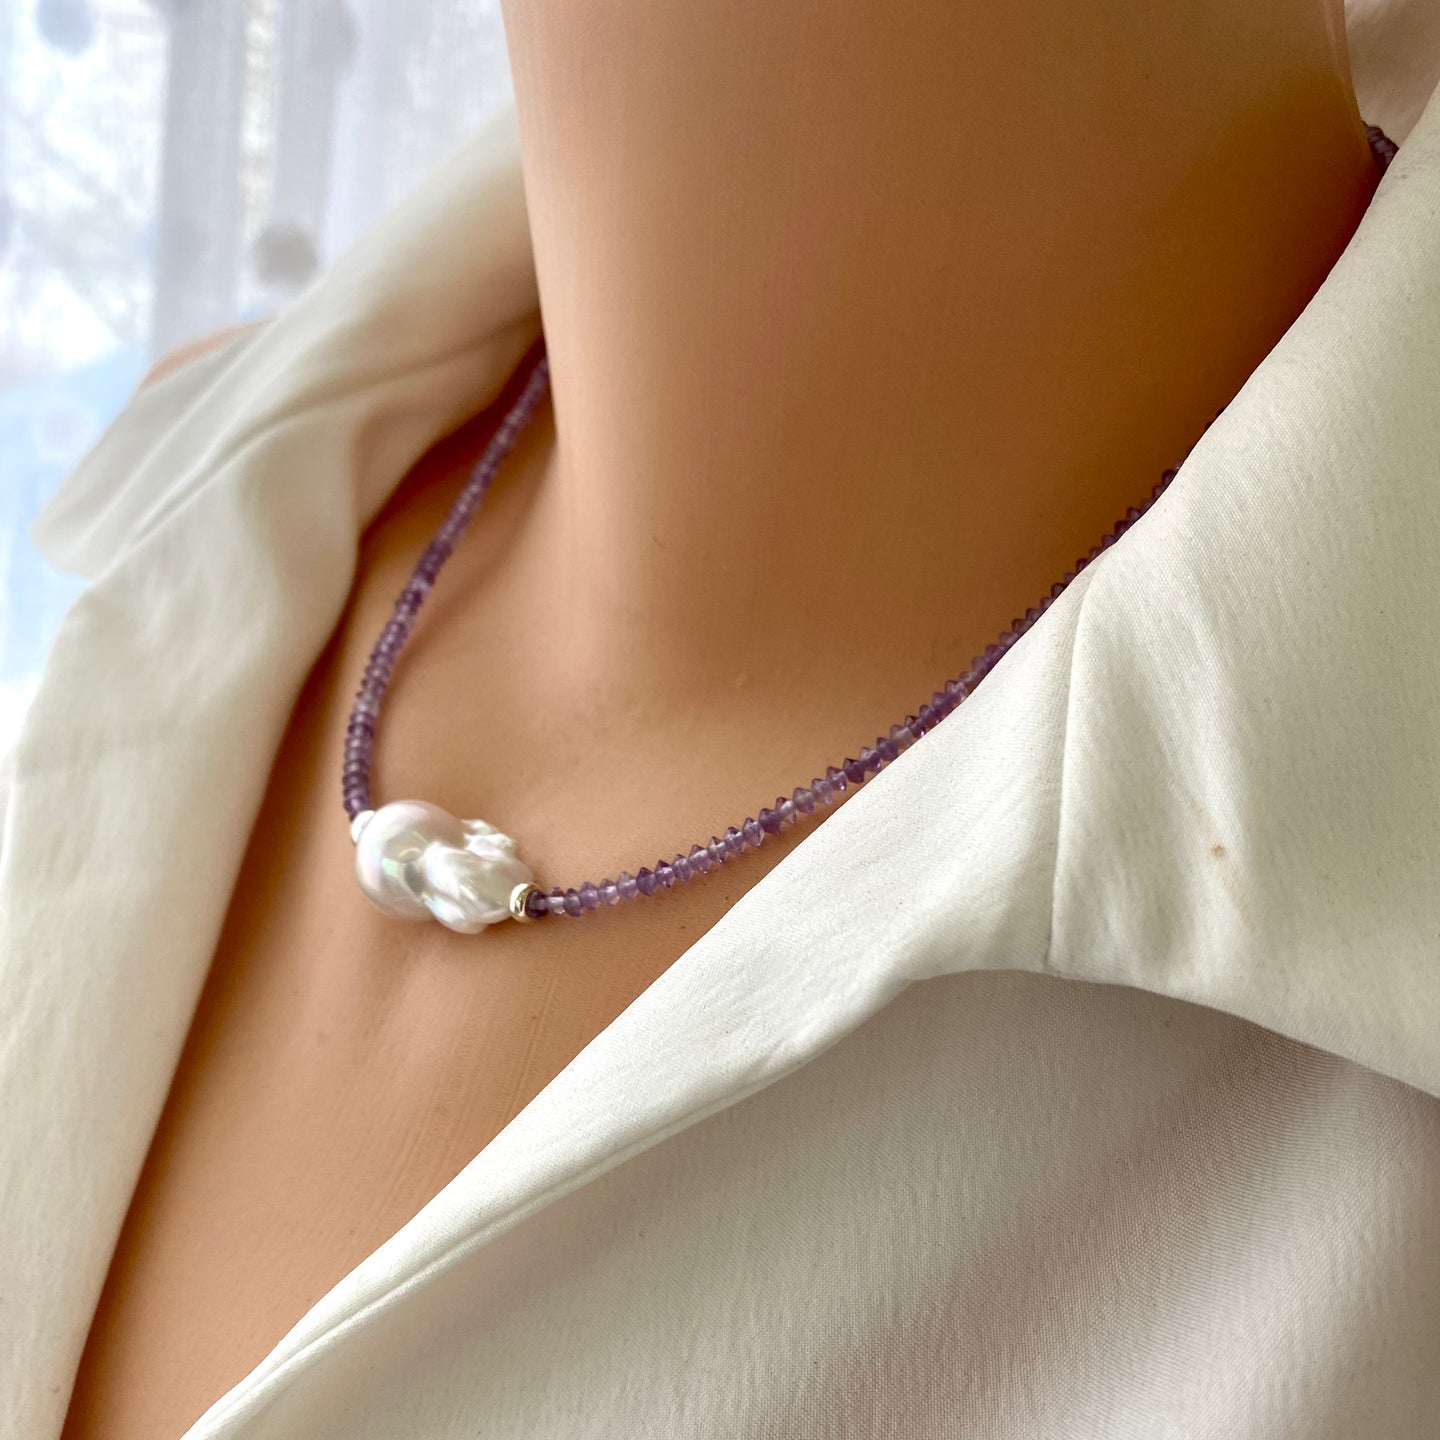 Dainty Light Lavender Amethyst & Baroque Pearl Necklace, February Birthstone, Silver, 17.5